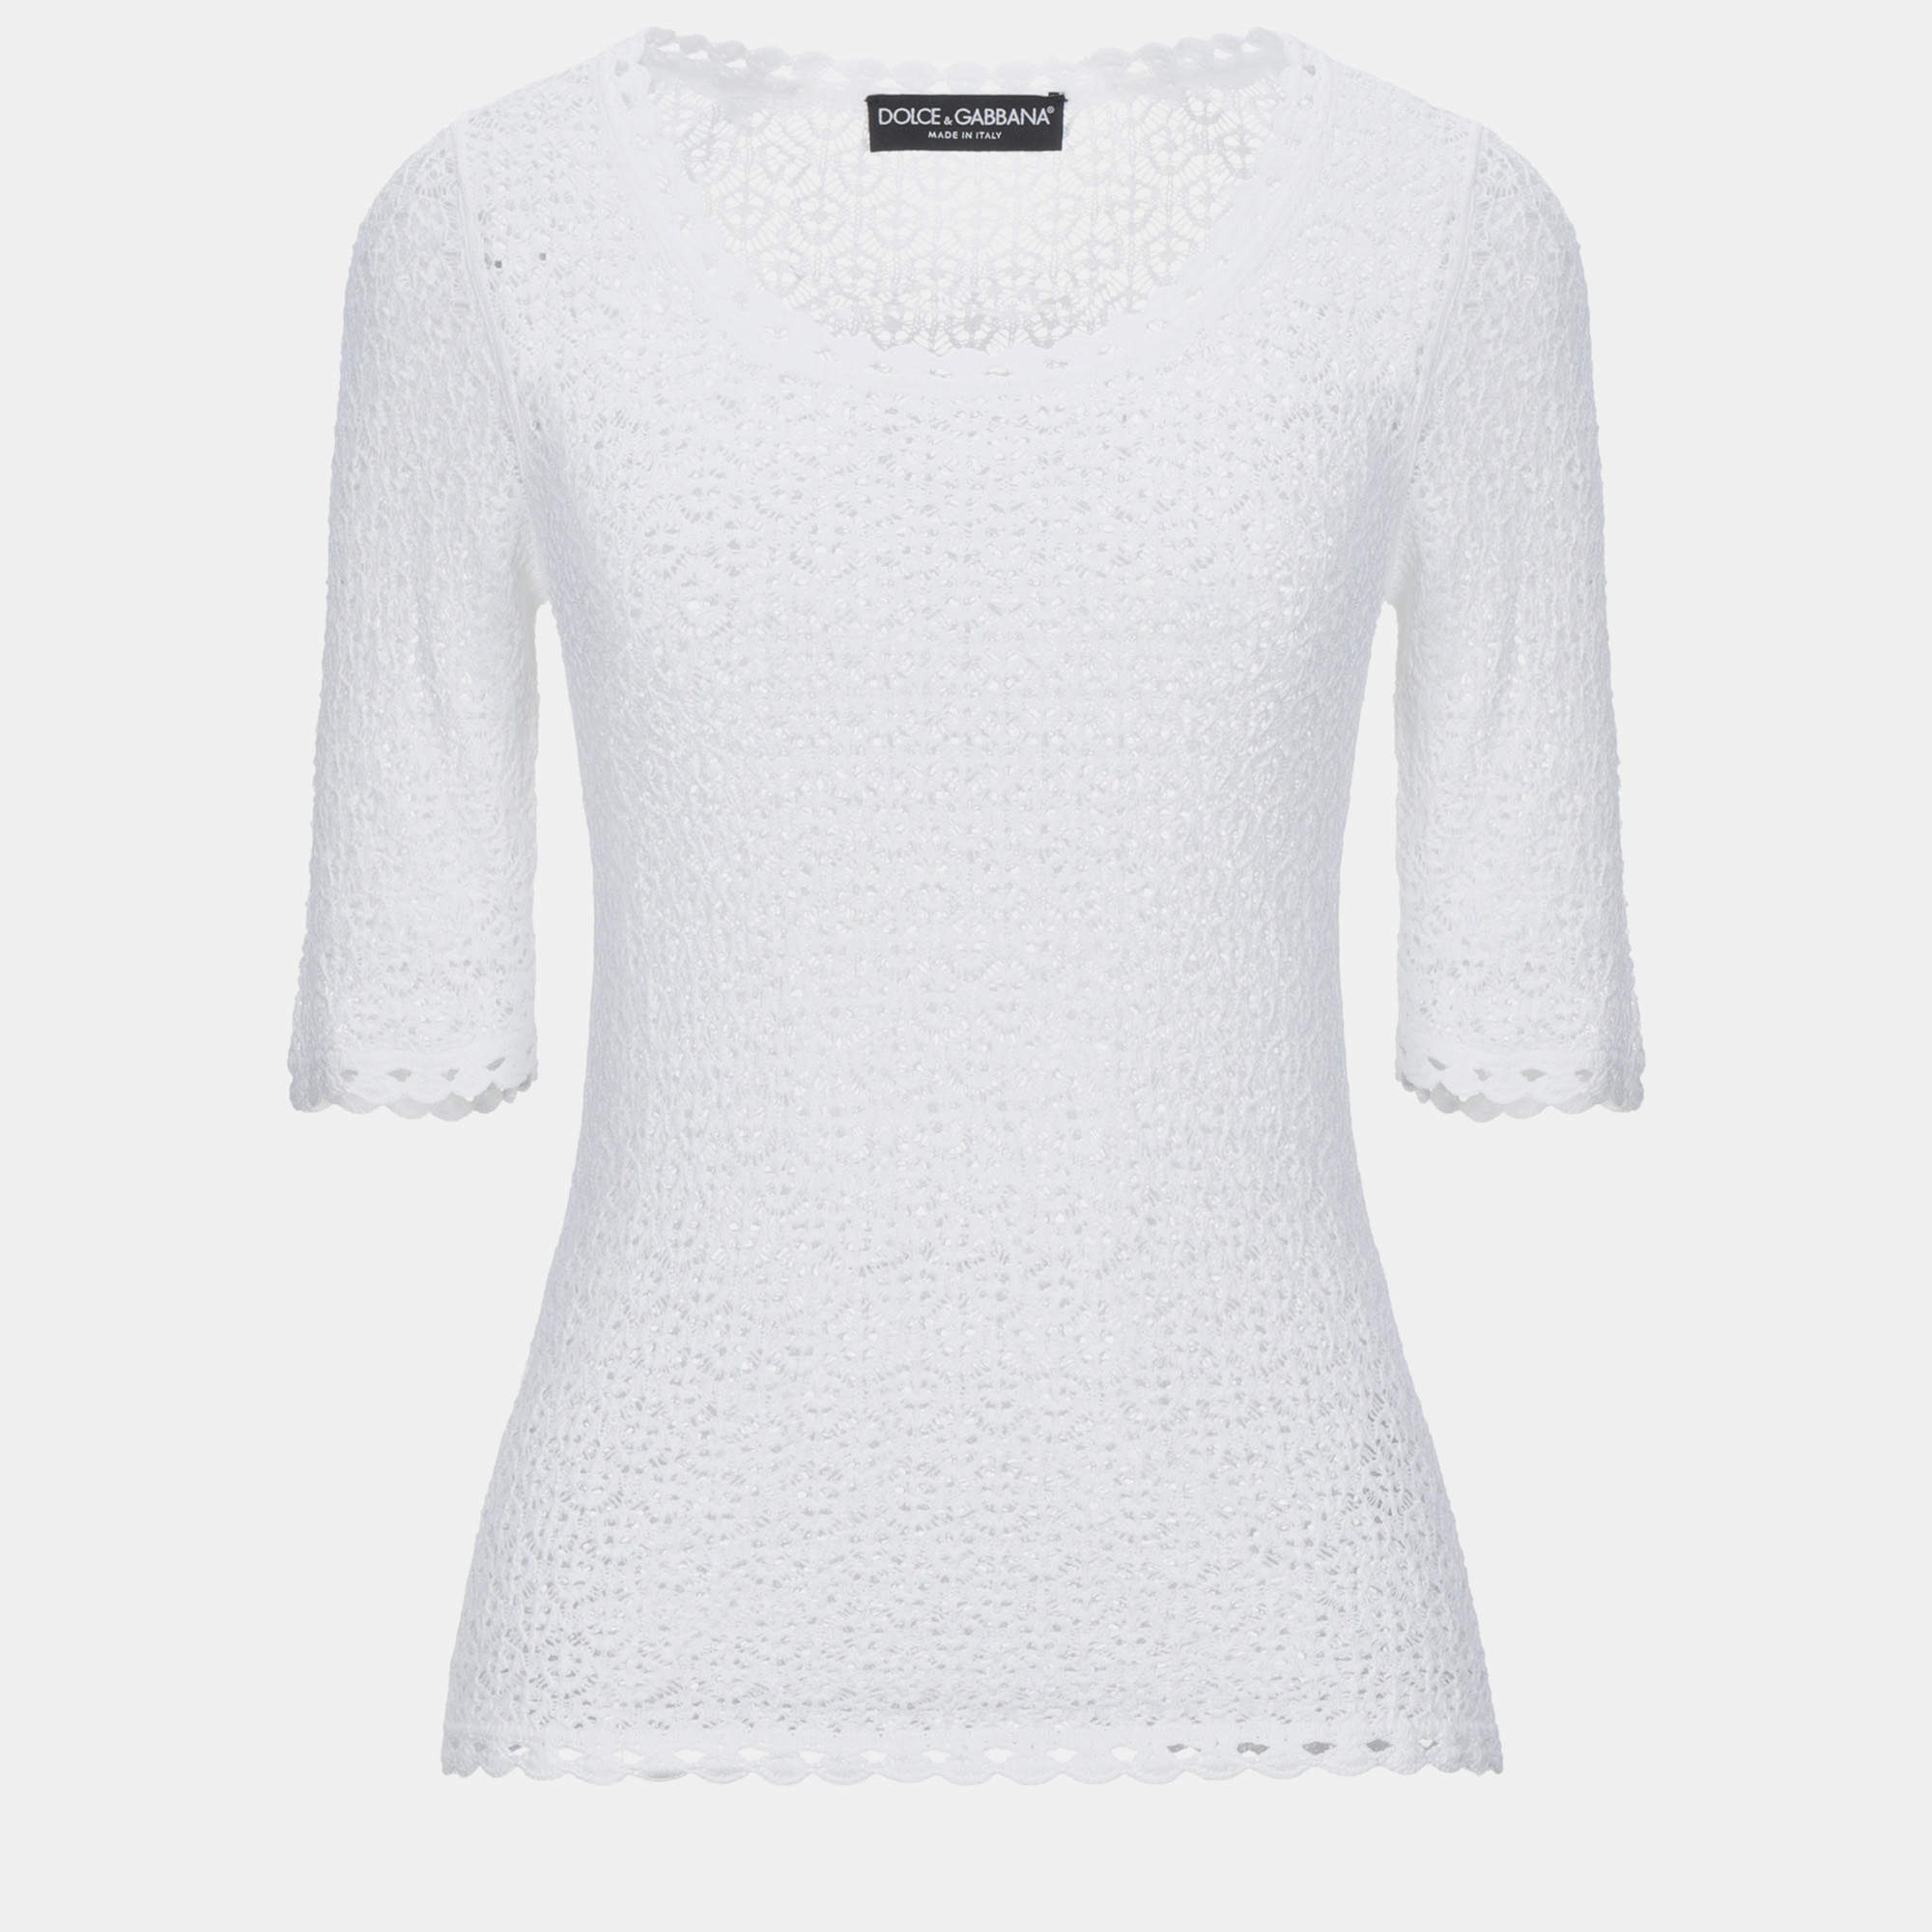 Dolce & Gabbana Viscose Sweater IT 40